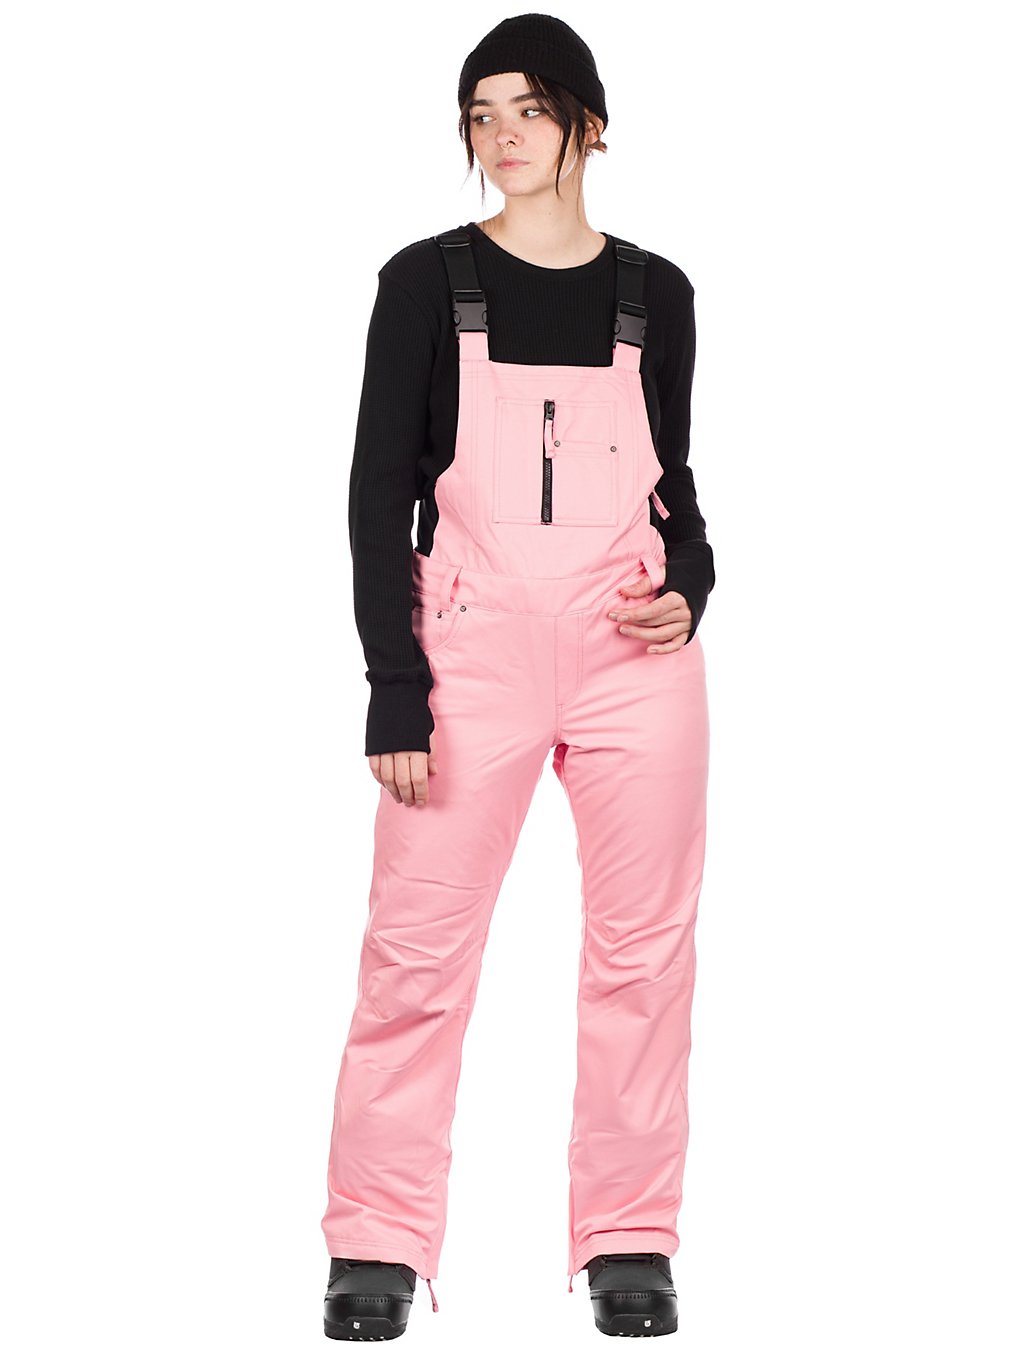 Aperture Adventure Bib Pants pink icing kaufen